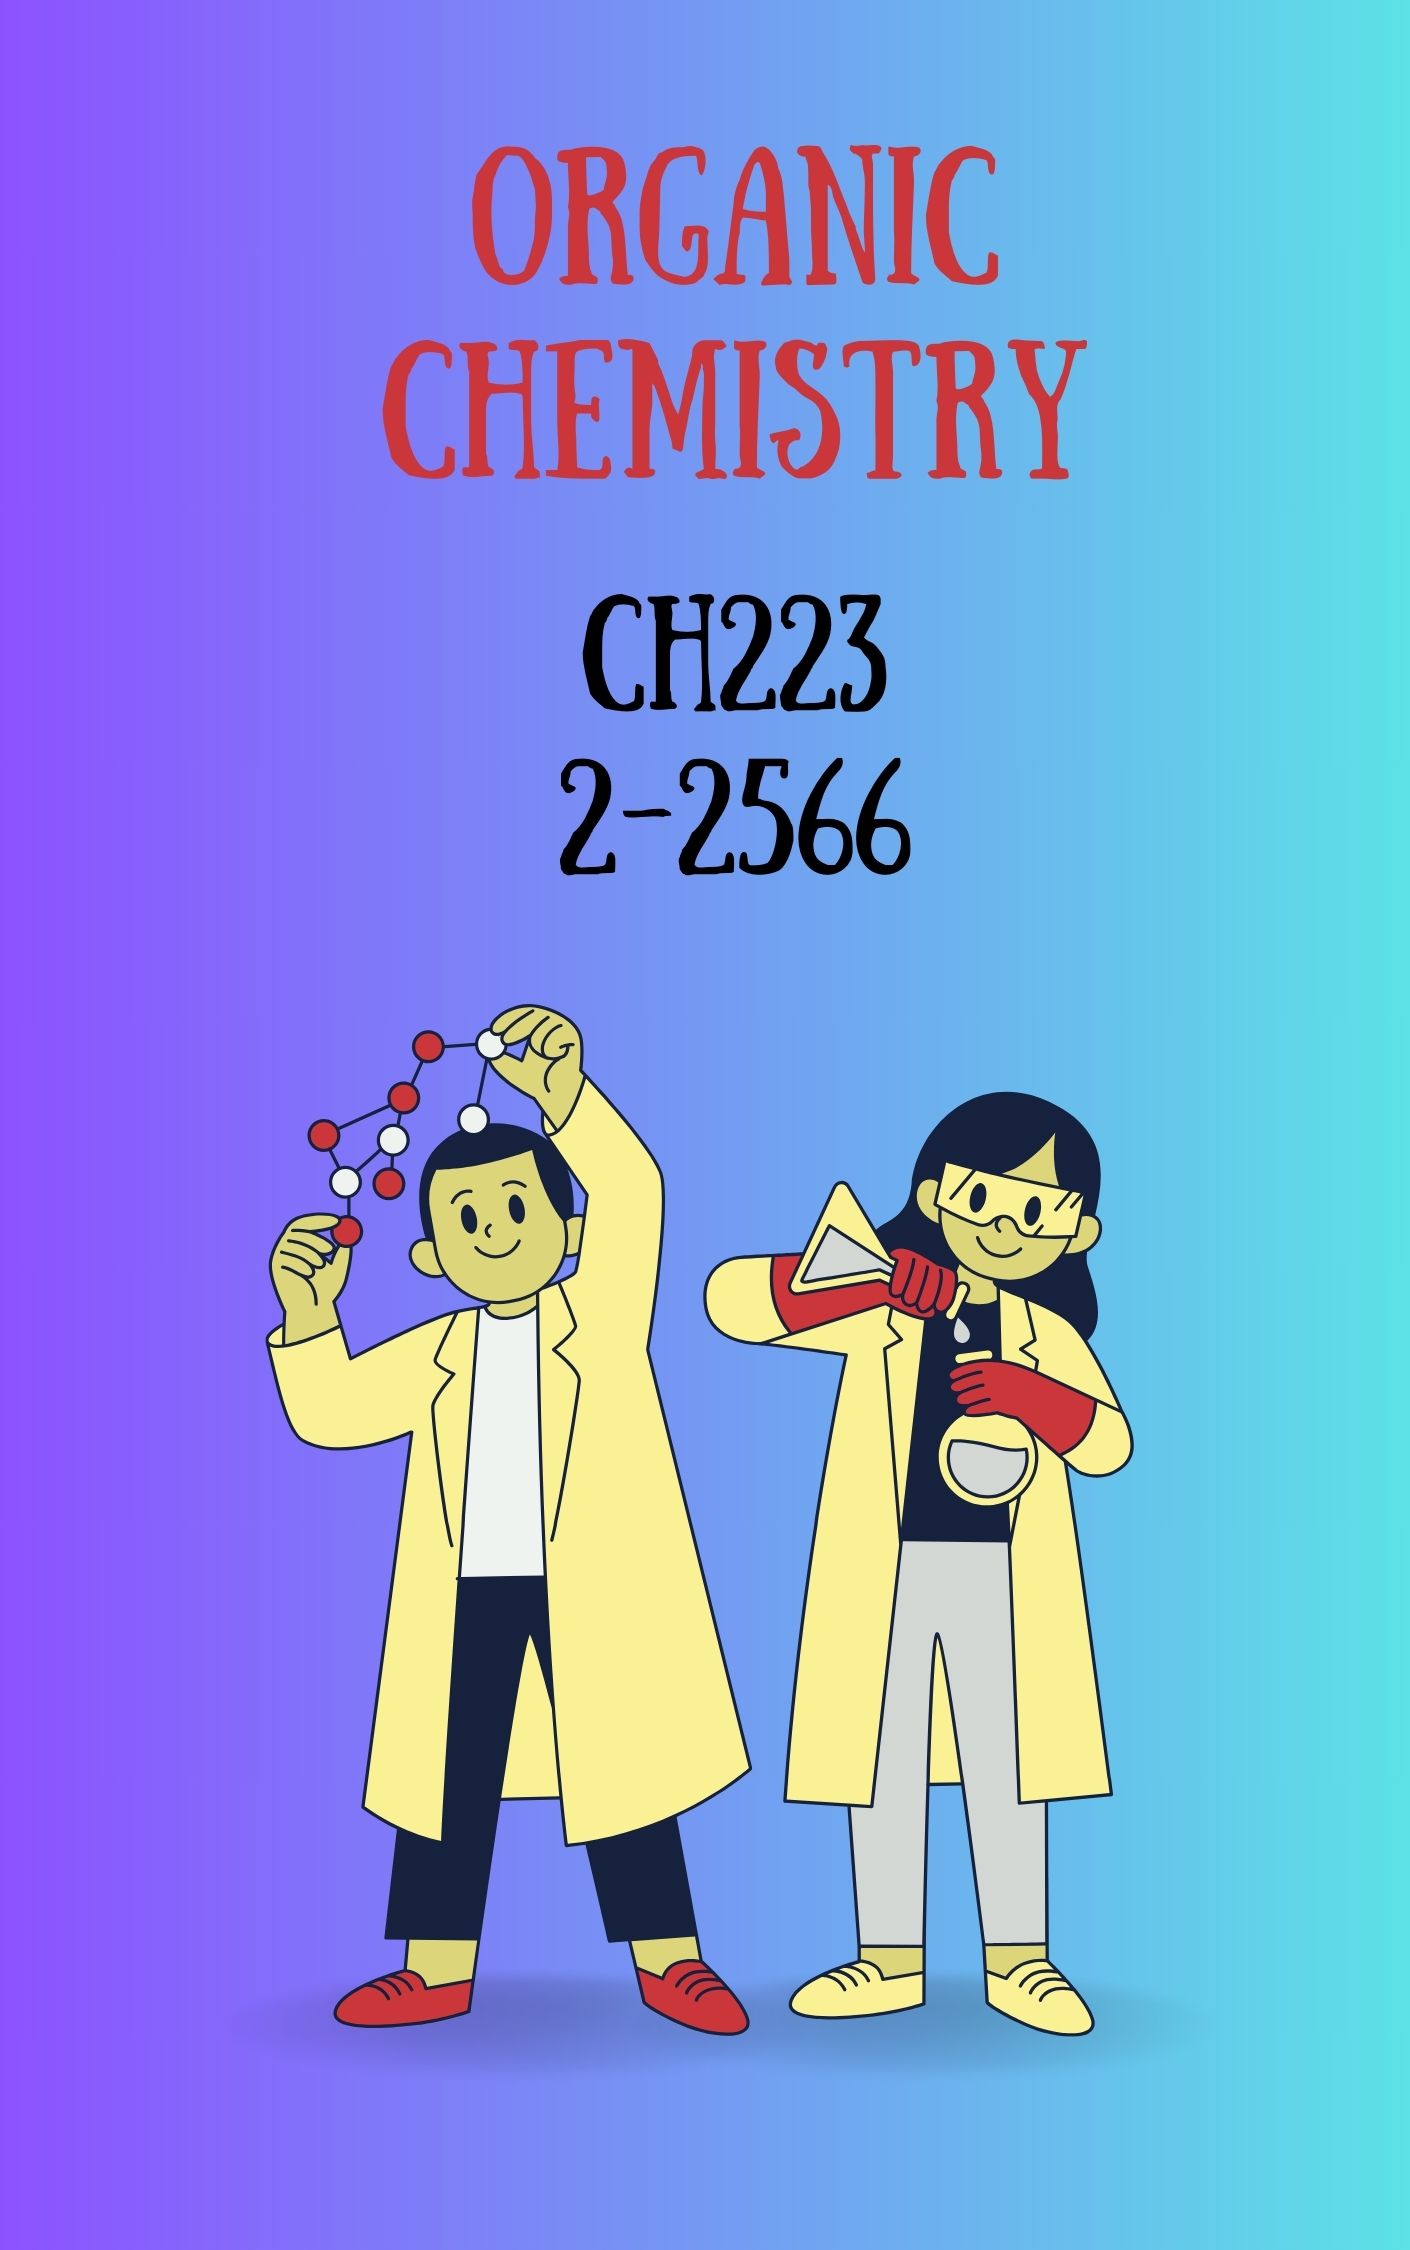 CH223-ORGANIC CHEMISTRY FOR TEACHER I